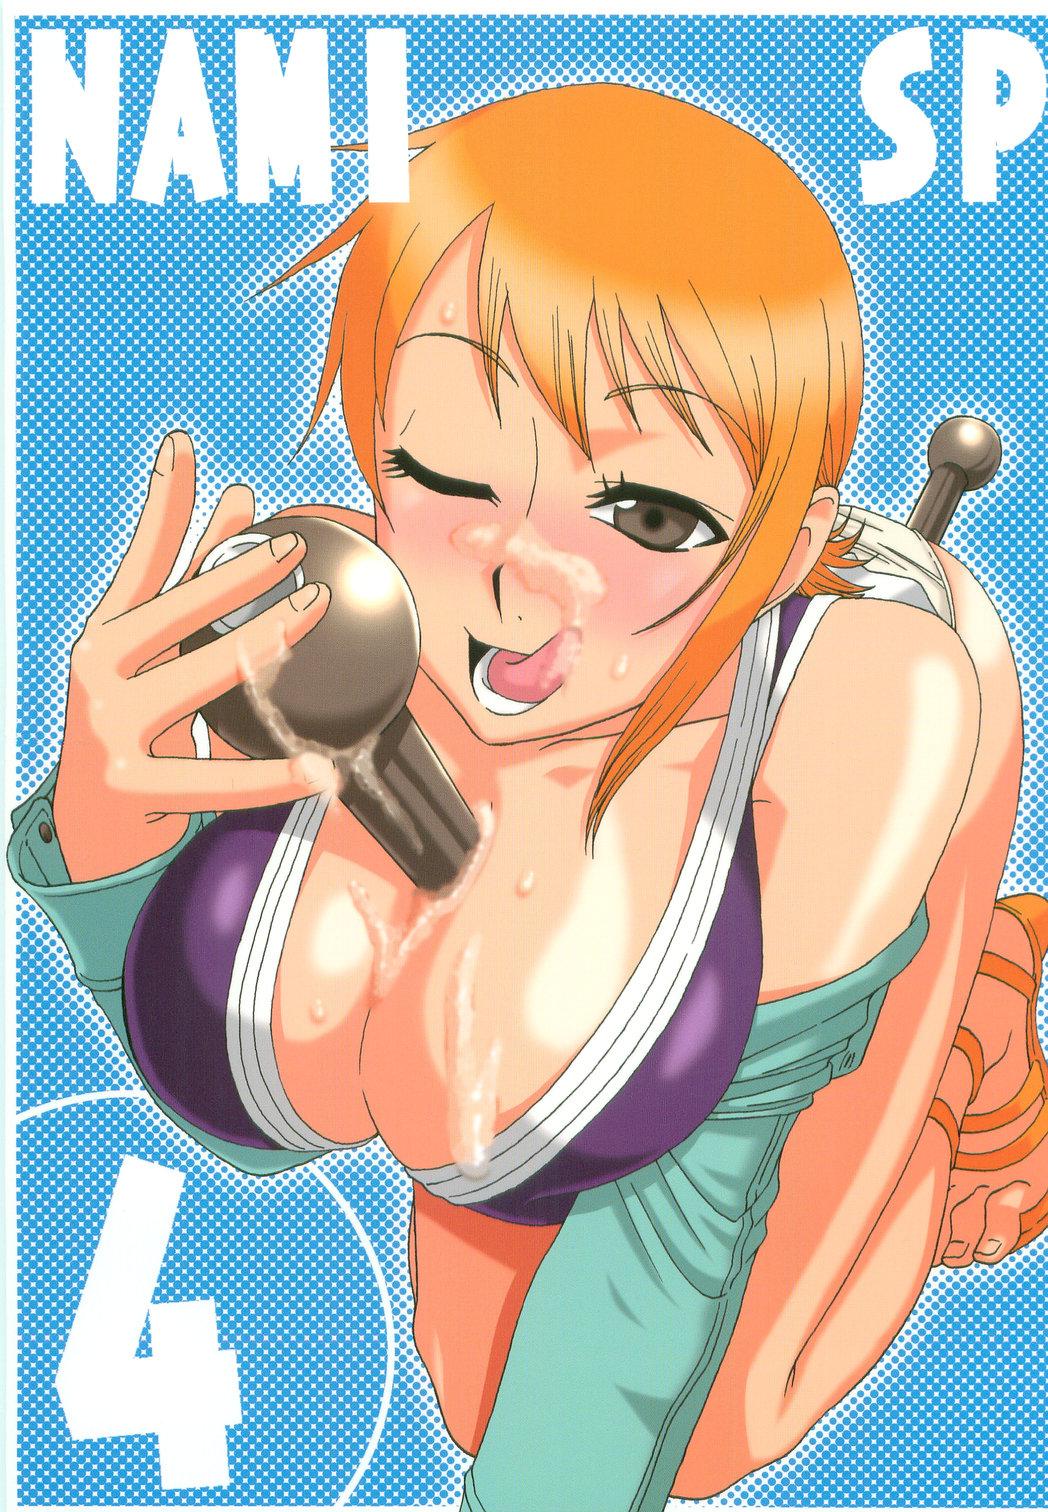 Small Tits Nami no Koukai Nisshi Special 4 - One piece Cuck - Picture 1